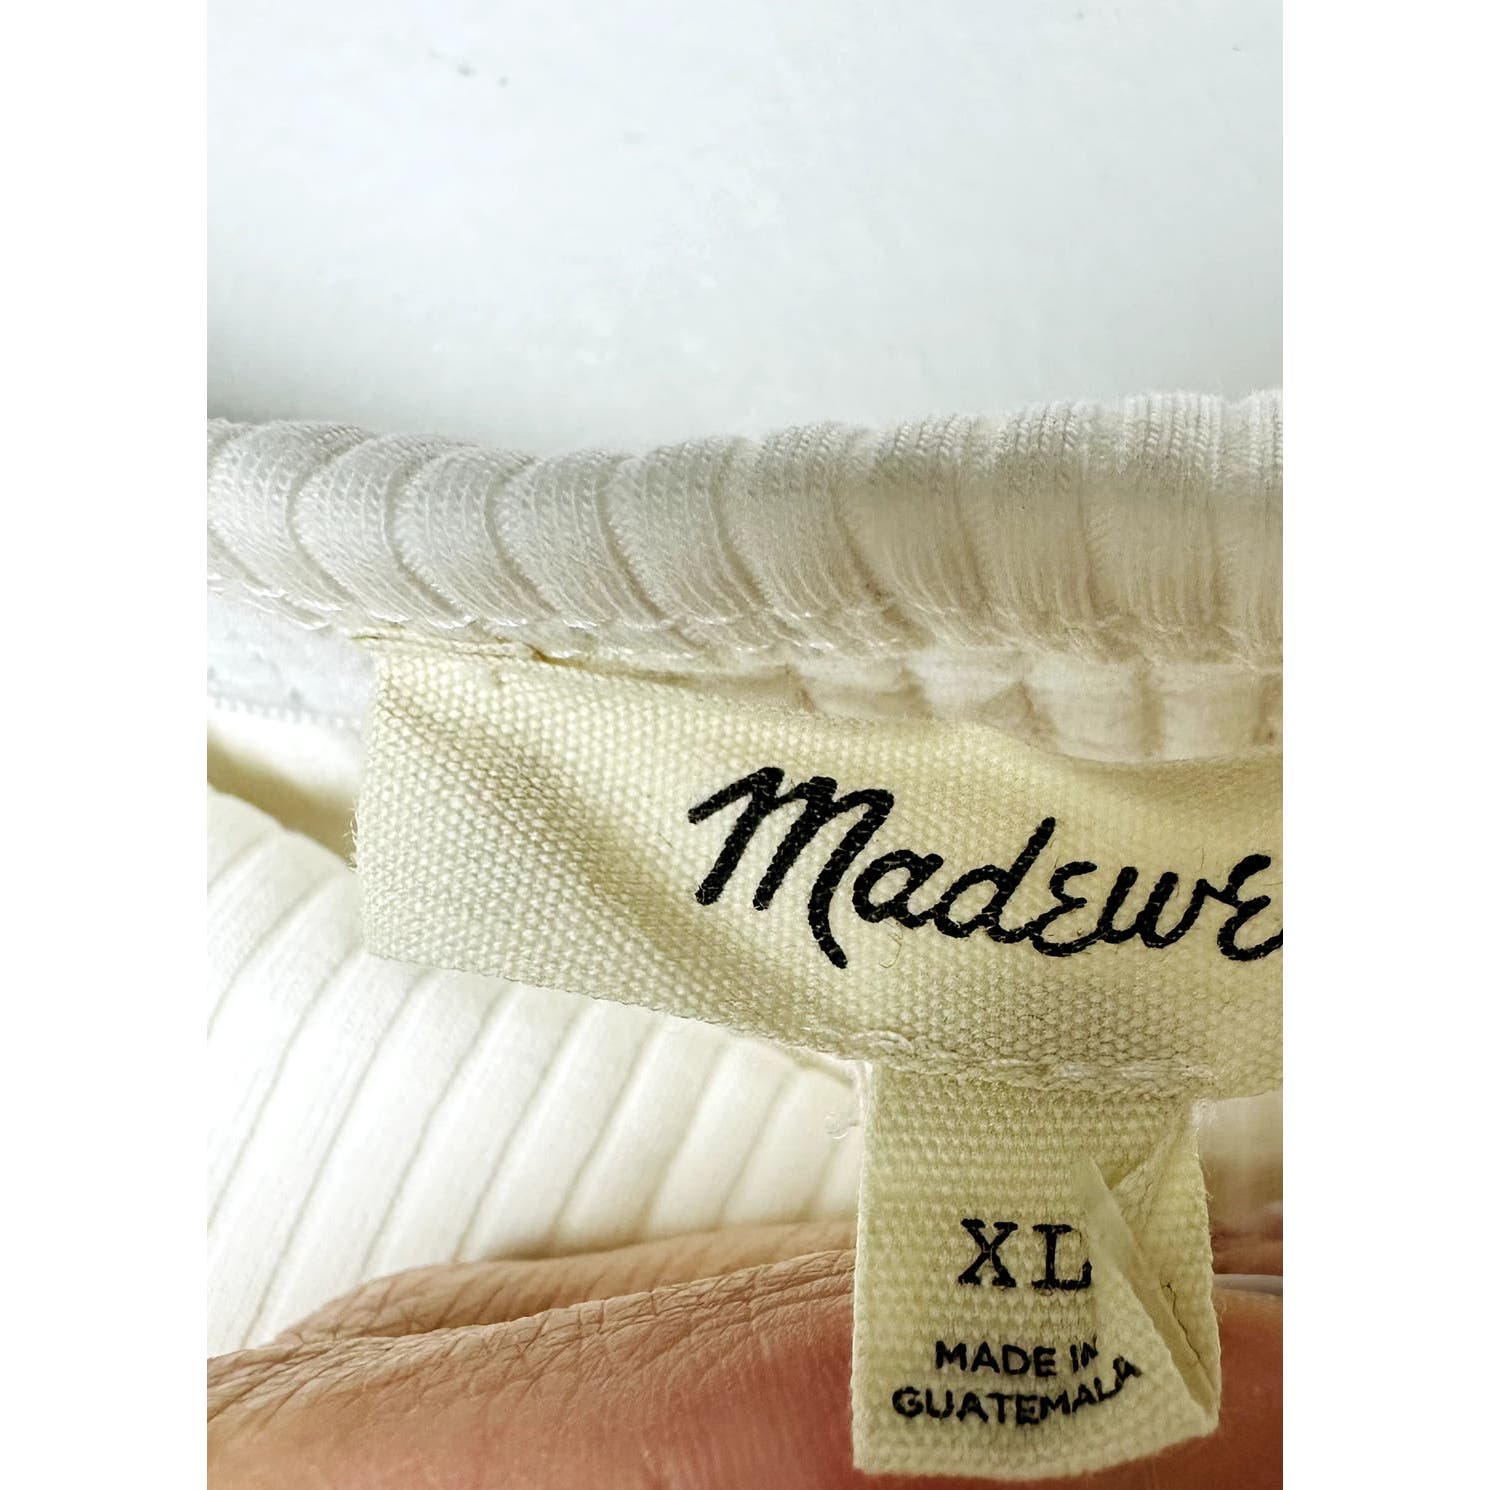 Madewell NWT White Crop Tube Top in Sleekhold Size XL